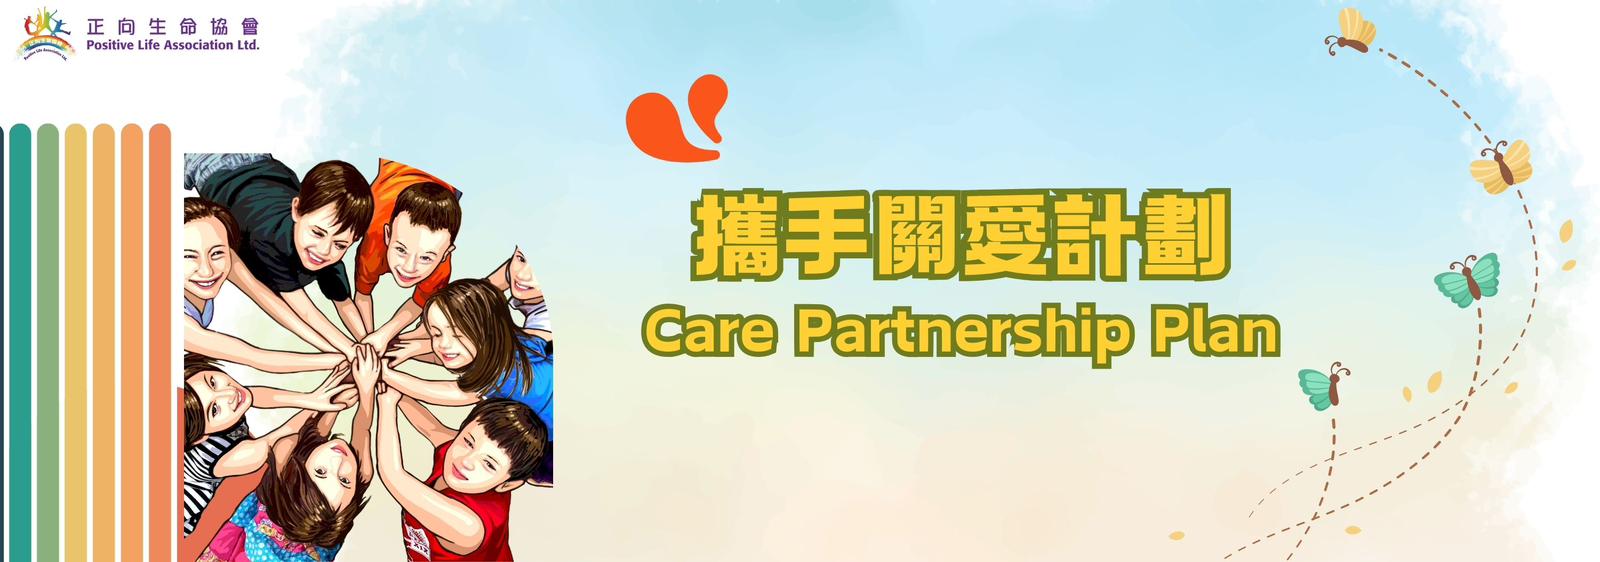 Care Partnership Plan